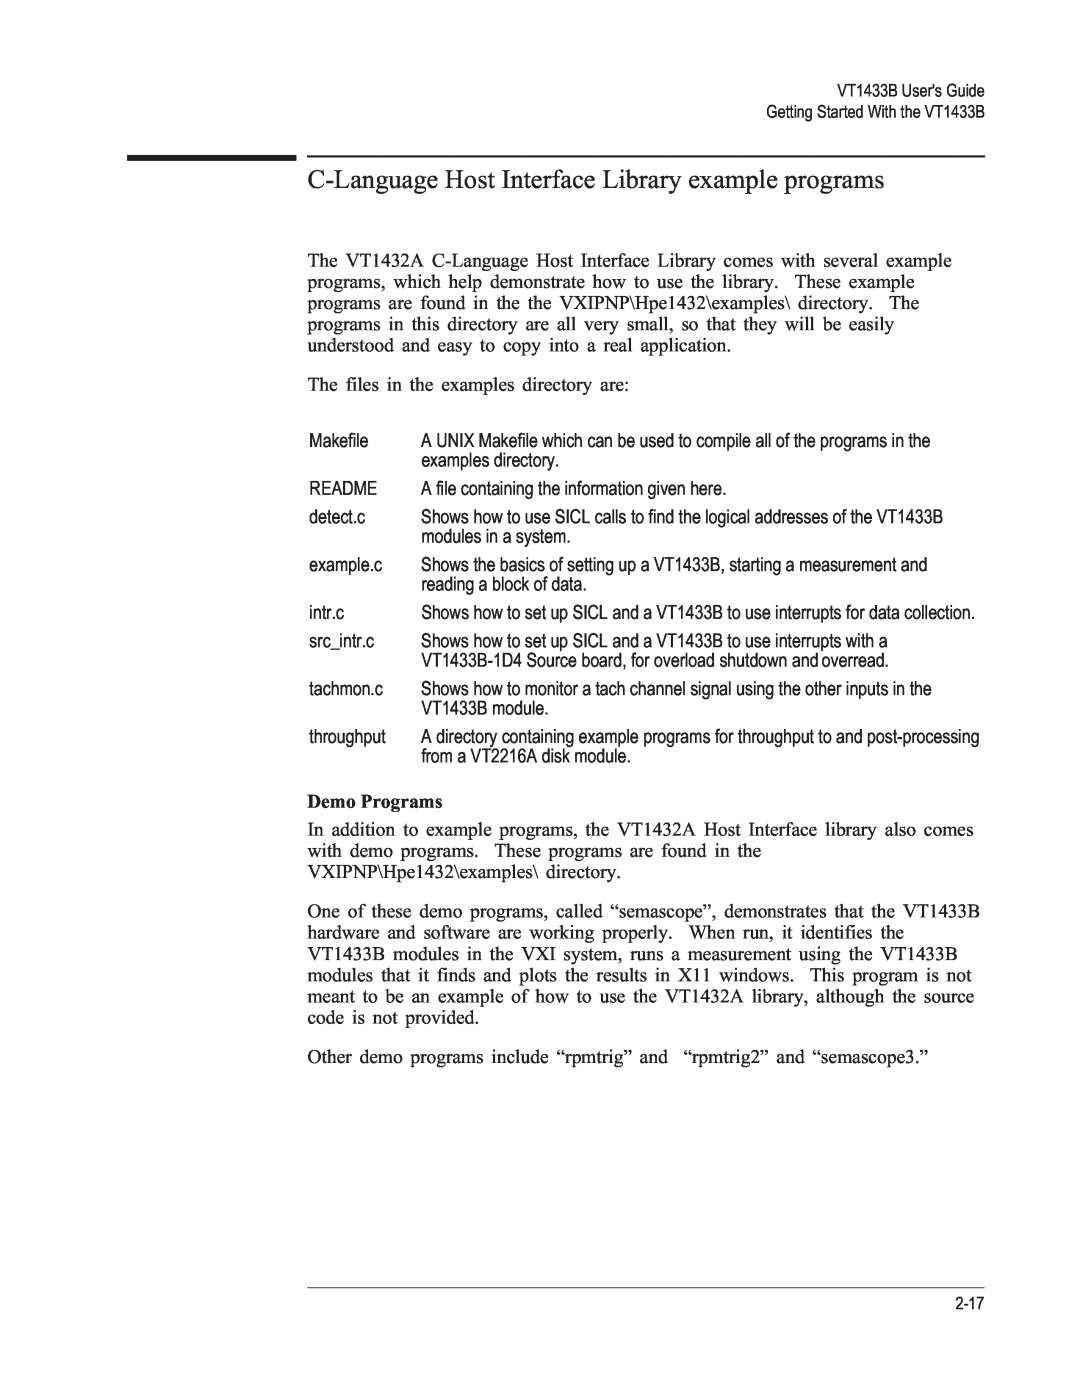 VXI VT1433B manual C-LanguageHost Interface Library example programs, Demo Programs 